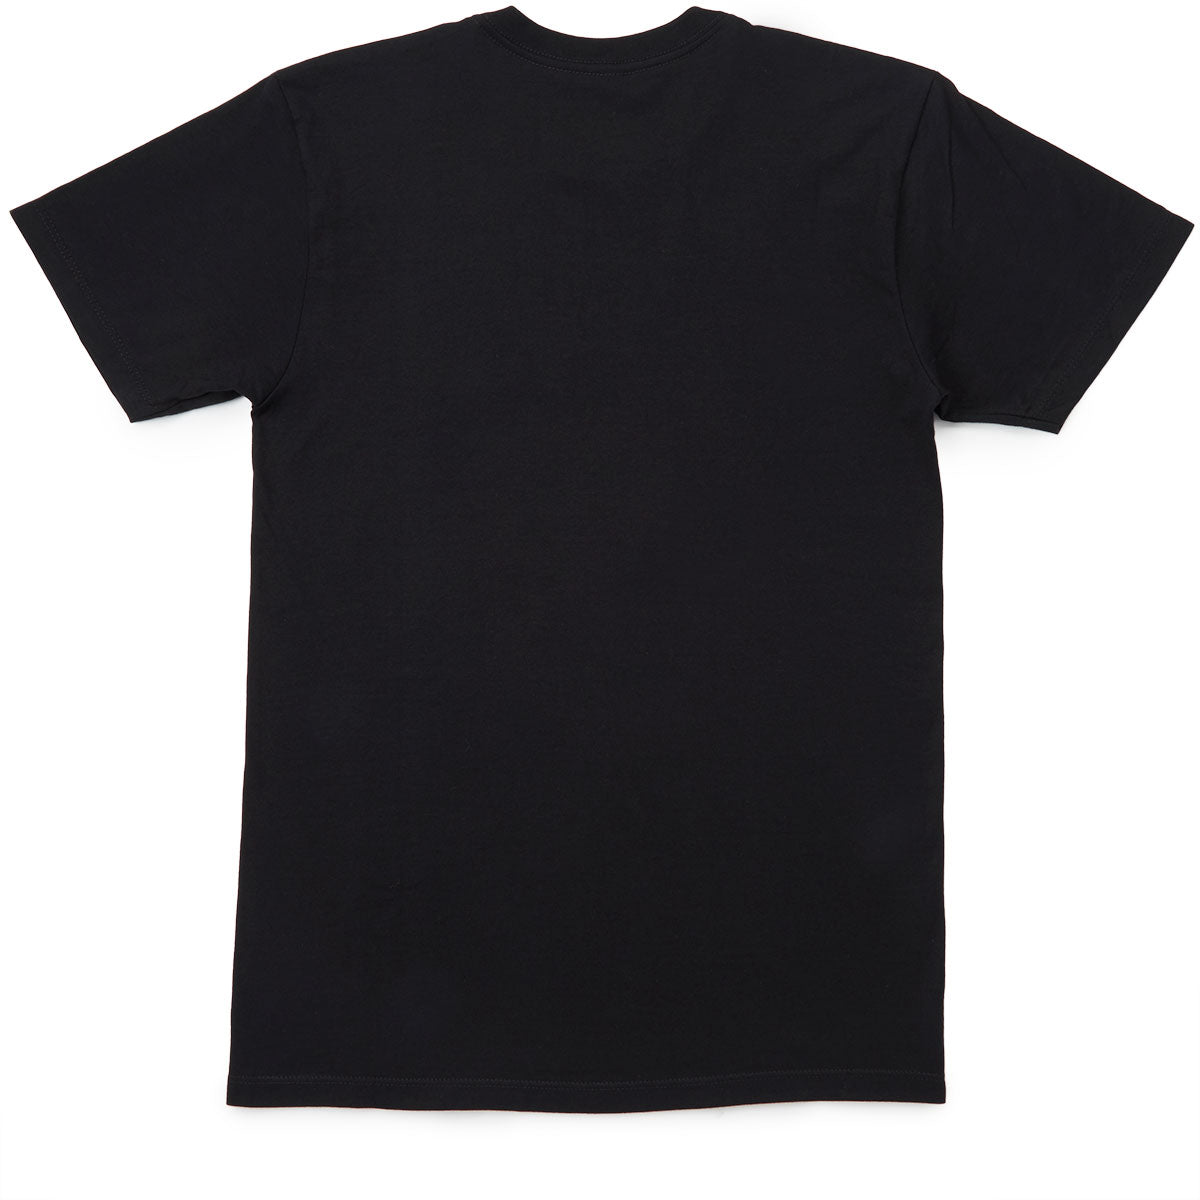 Thrasher Outlined T-Shirt - Black image 2